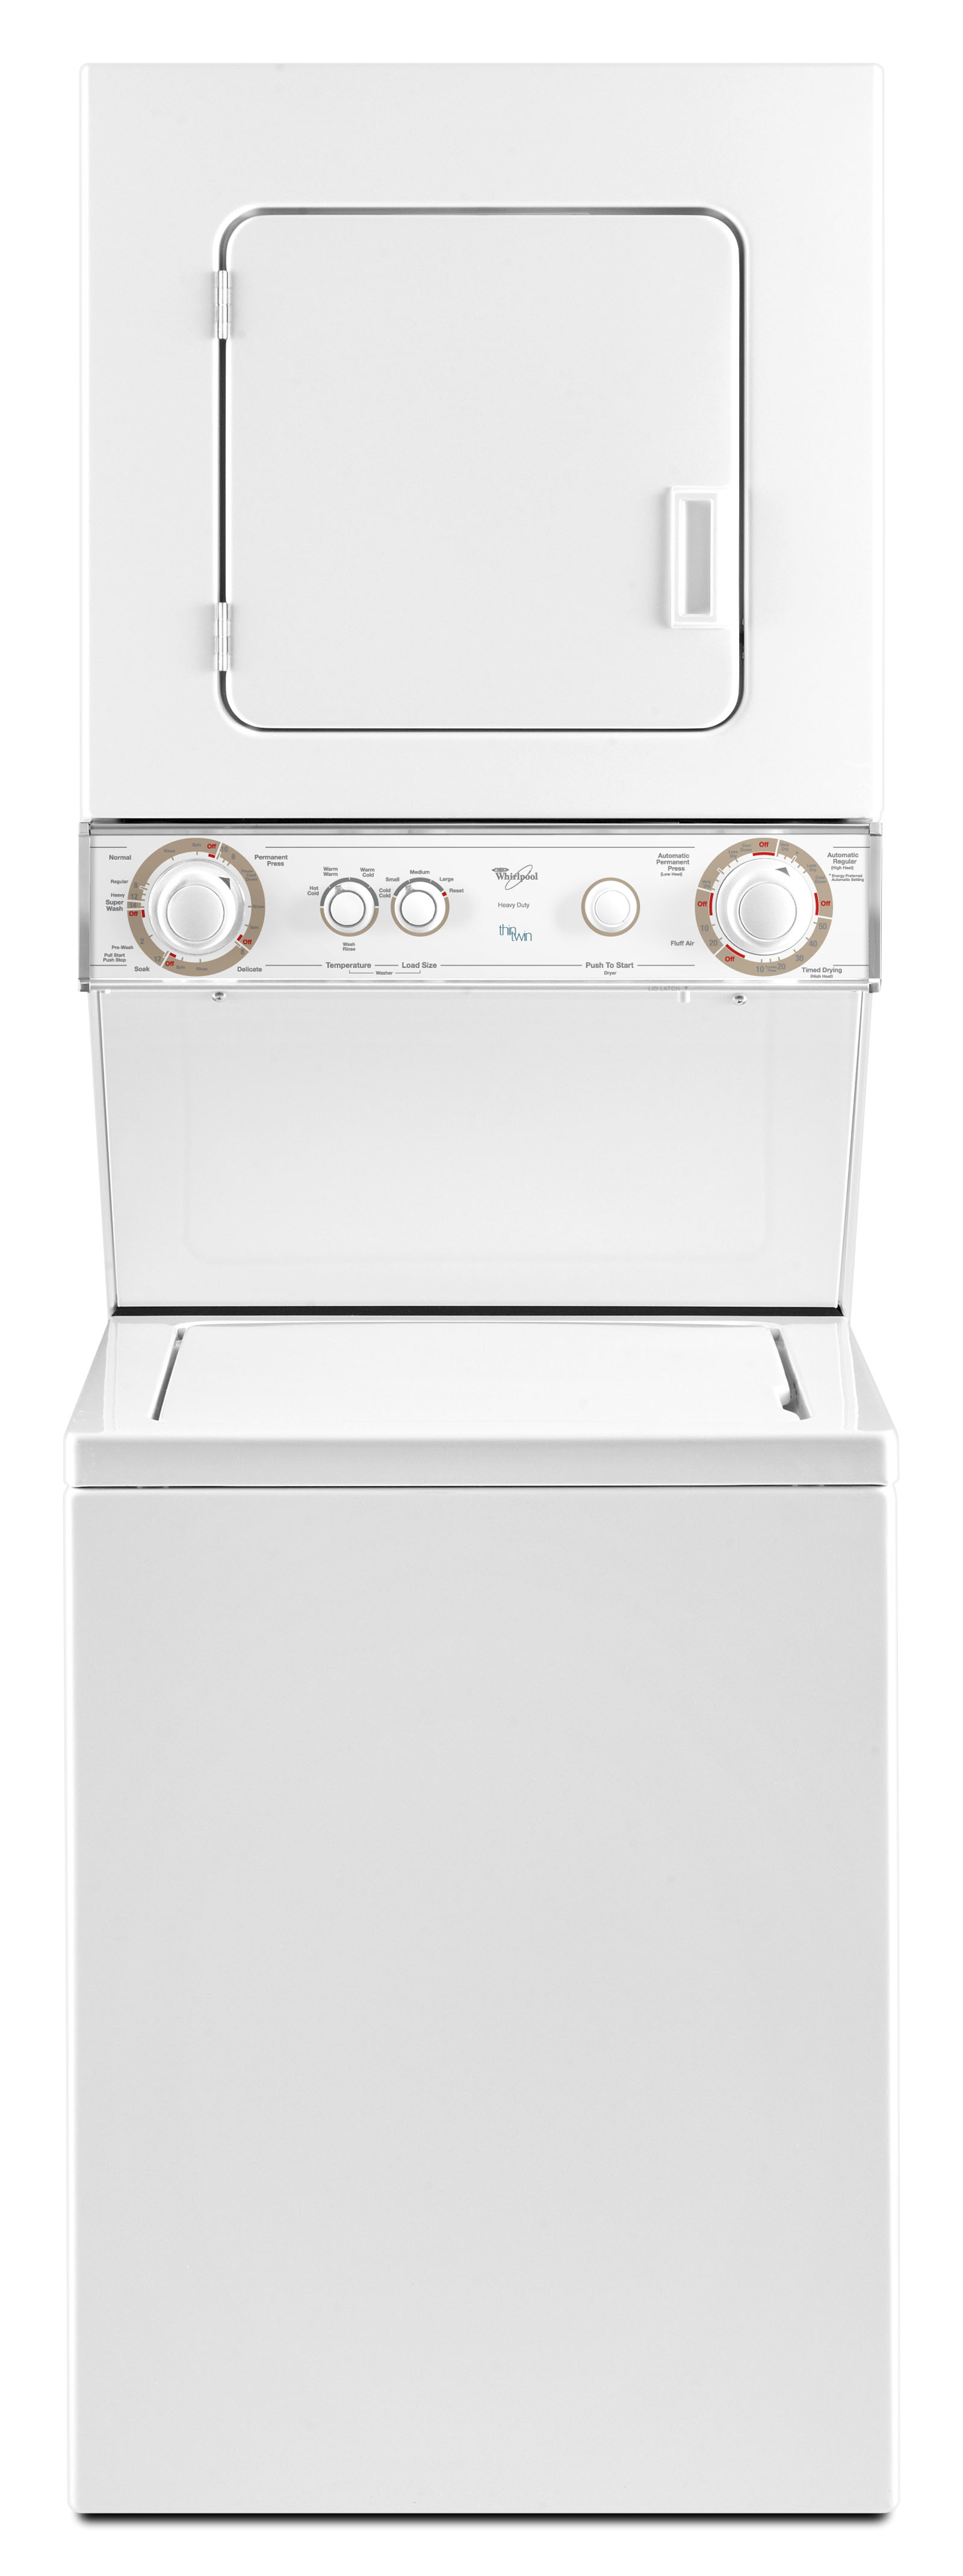 Washer/Dryer Laundry System logo